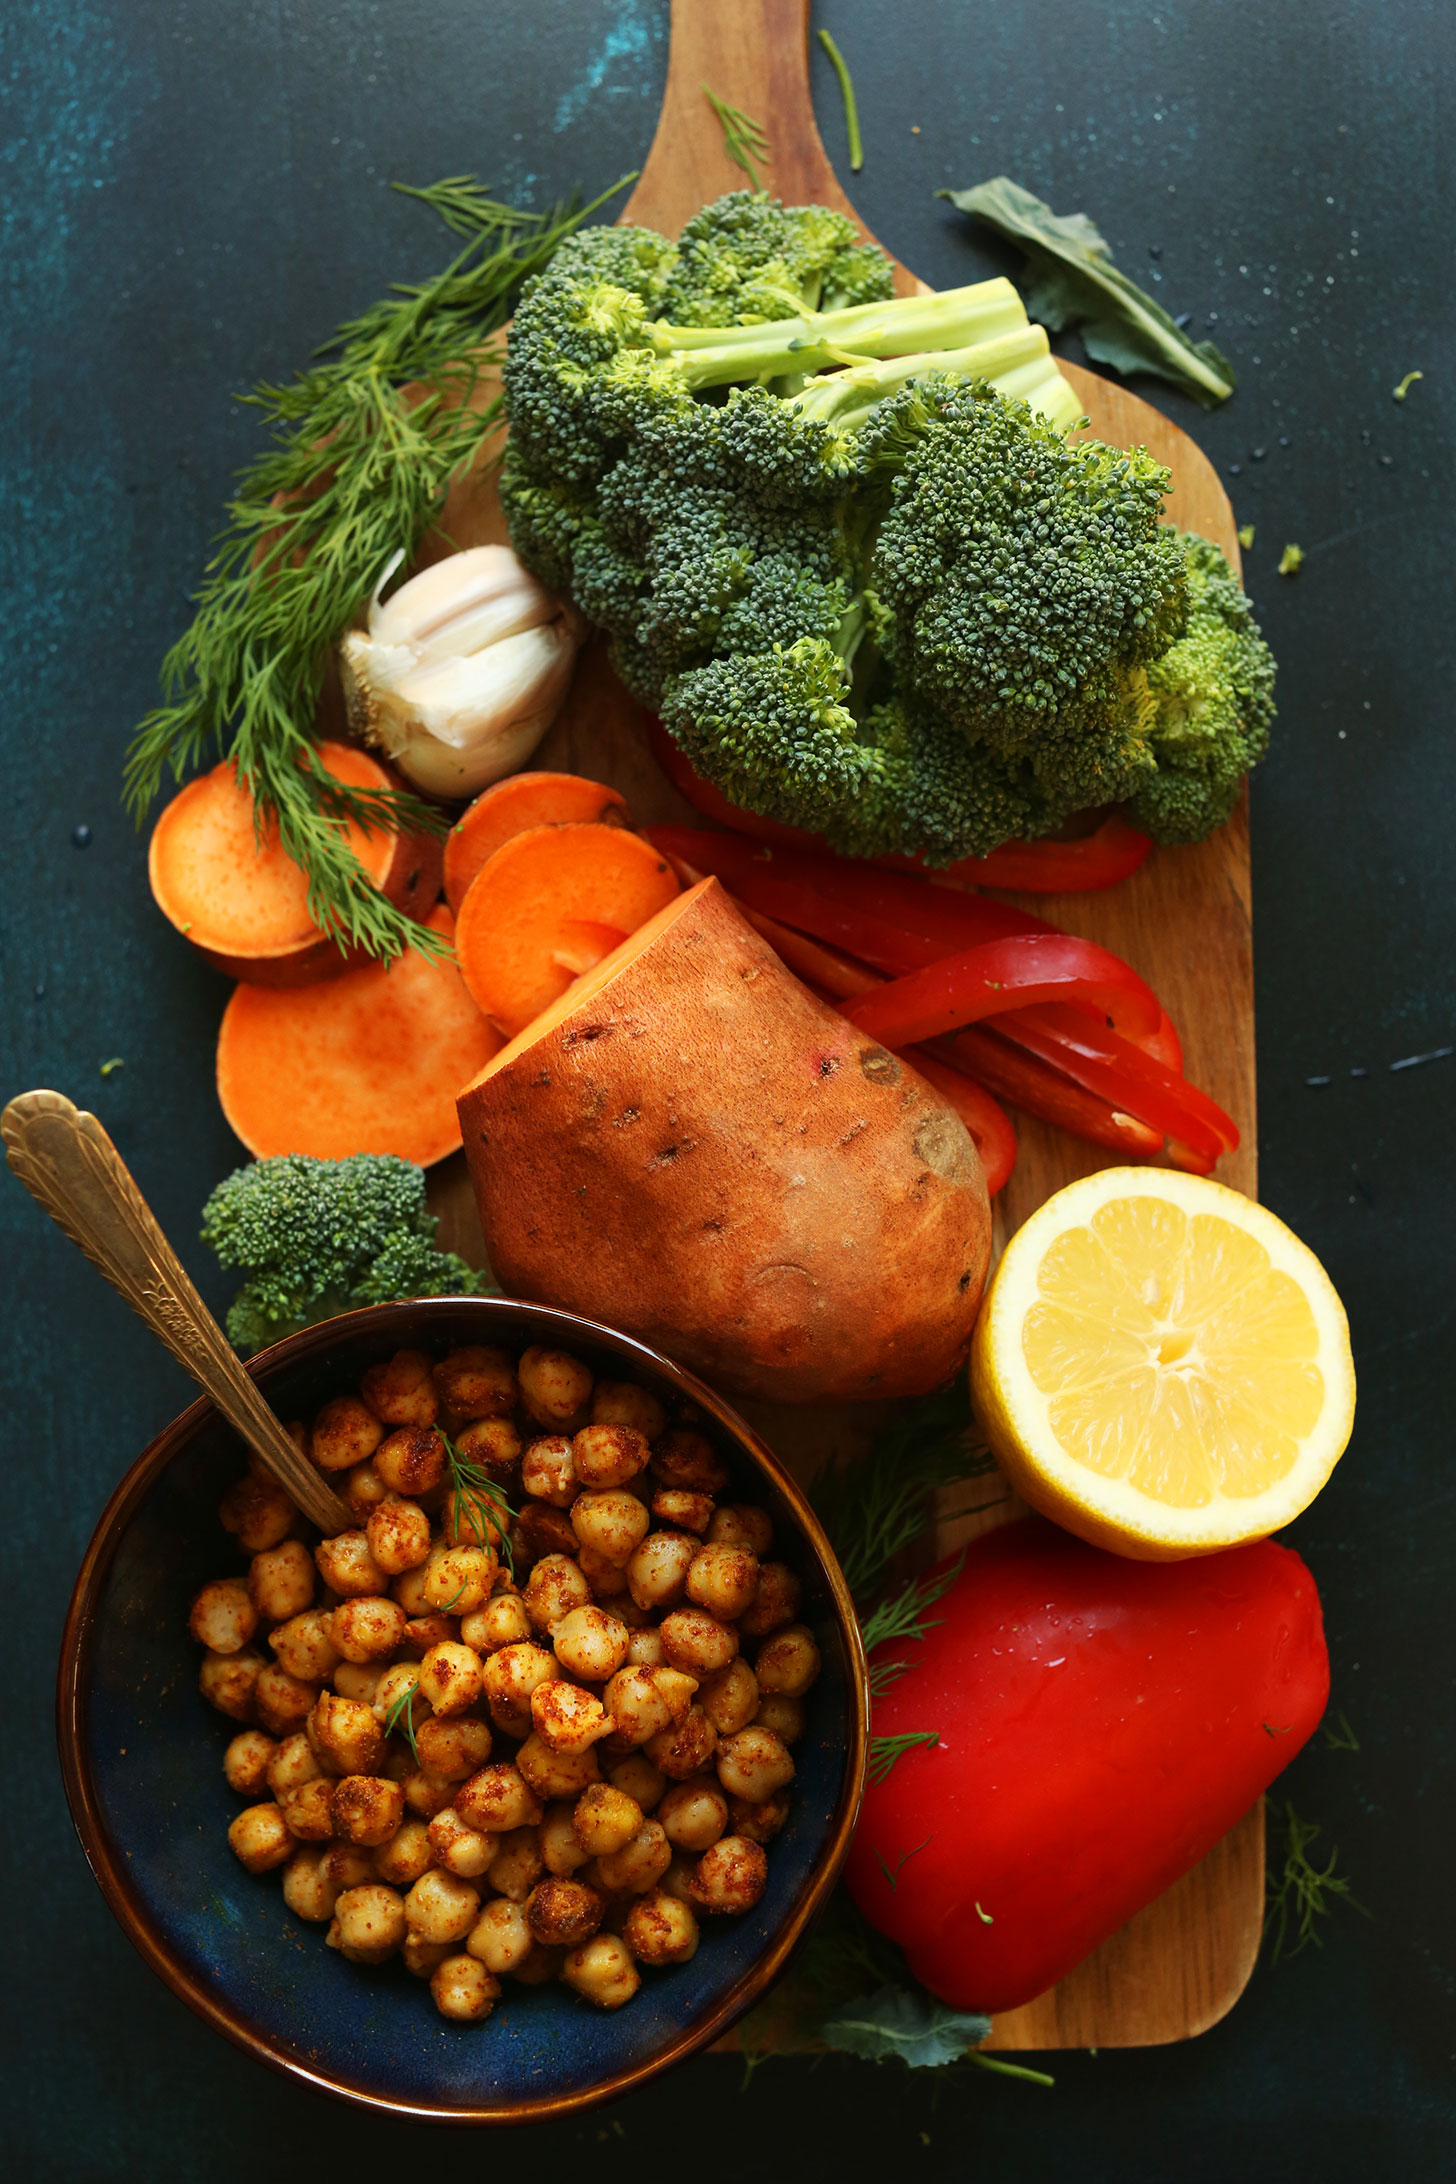 HEALTHY-30-minute-Broccoli-Sweet-Potato-Chickpea-Salad-with-a-simple-Garlicl-Dill-Sauce-vegan-glutenfree-dinner-recipe